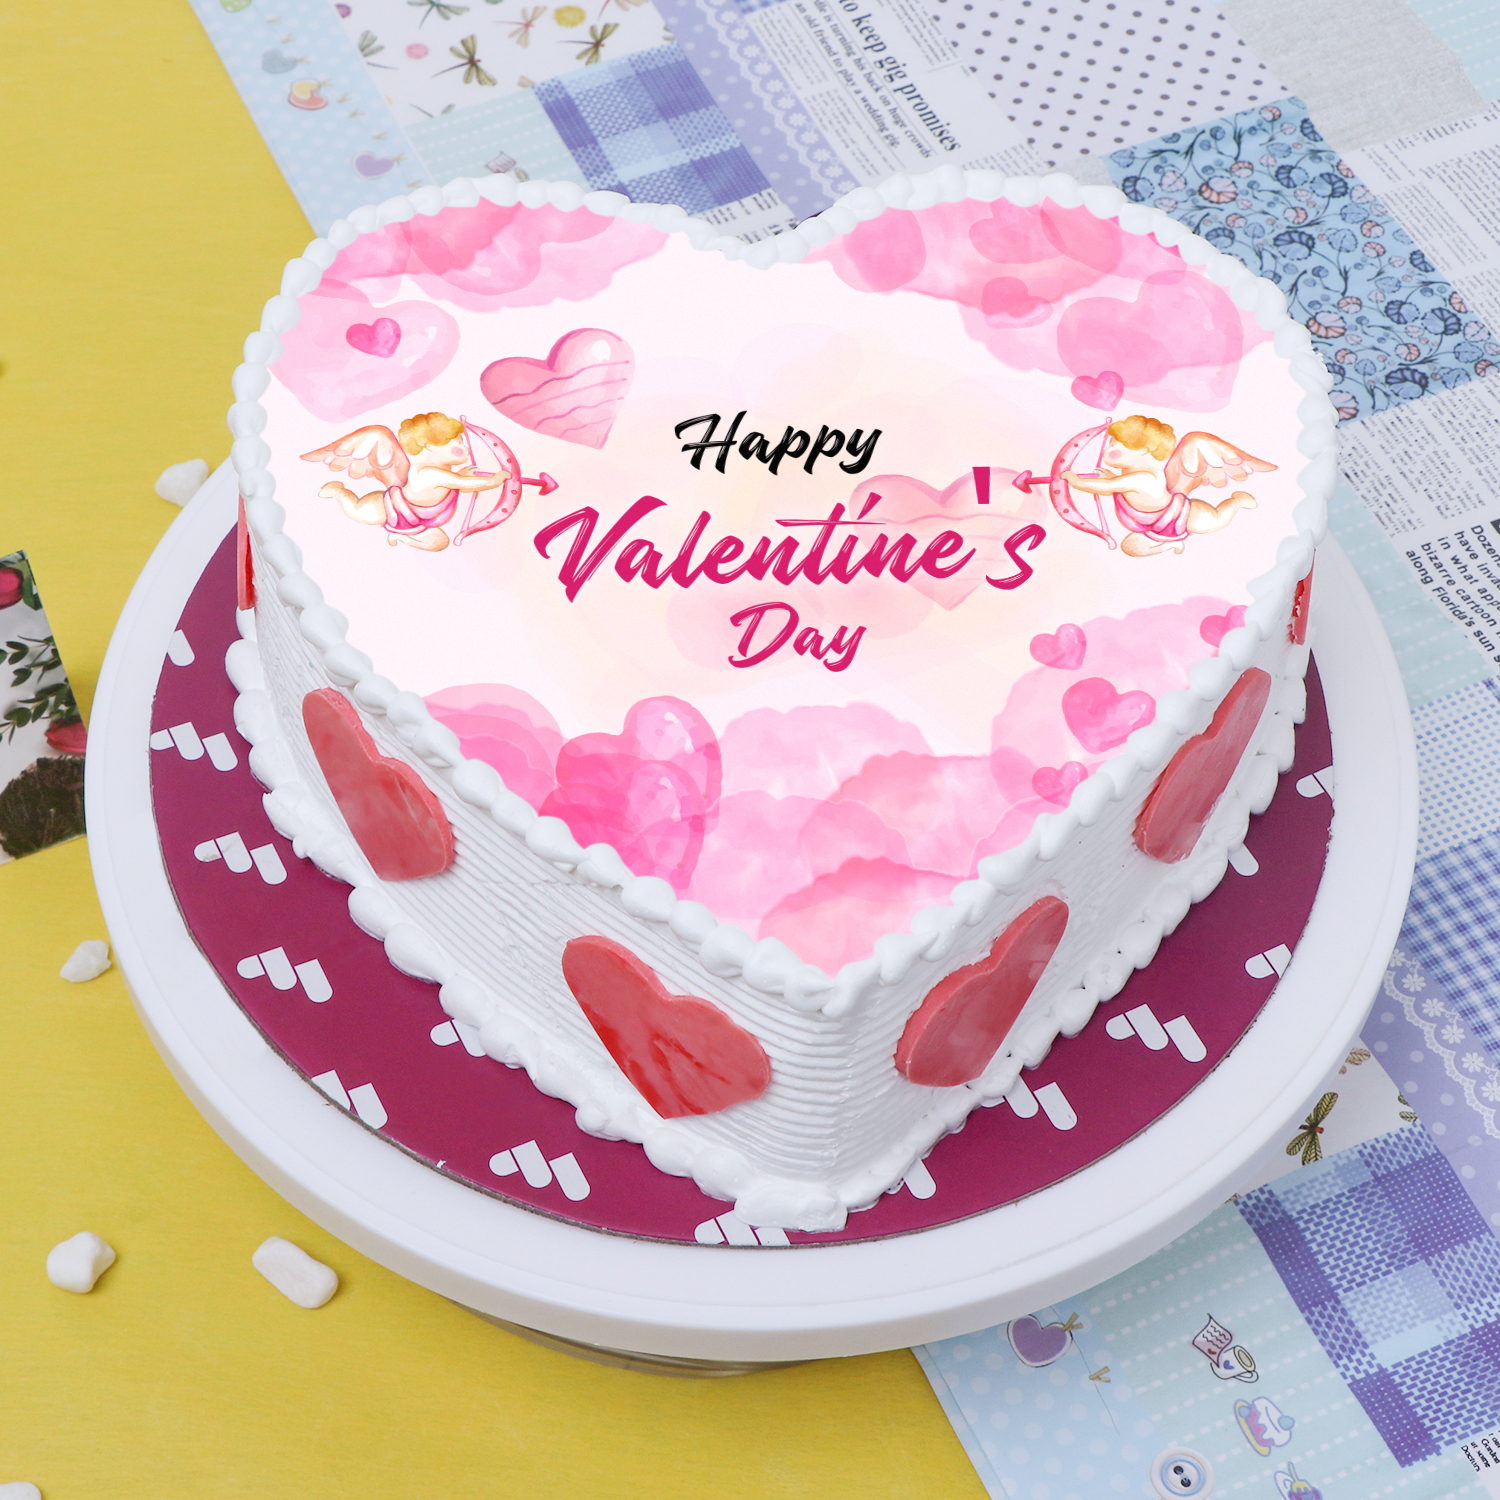 Valentine's Day Cake Designs